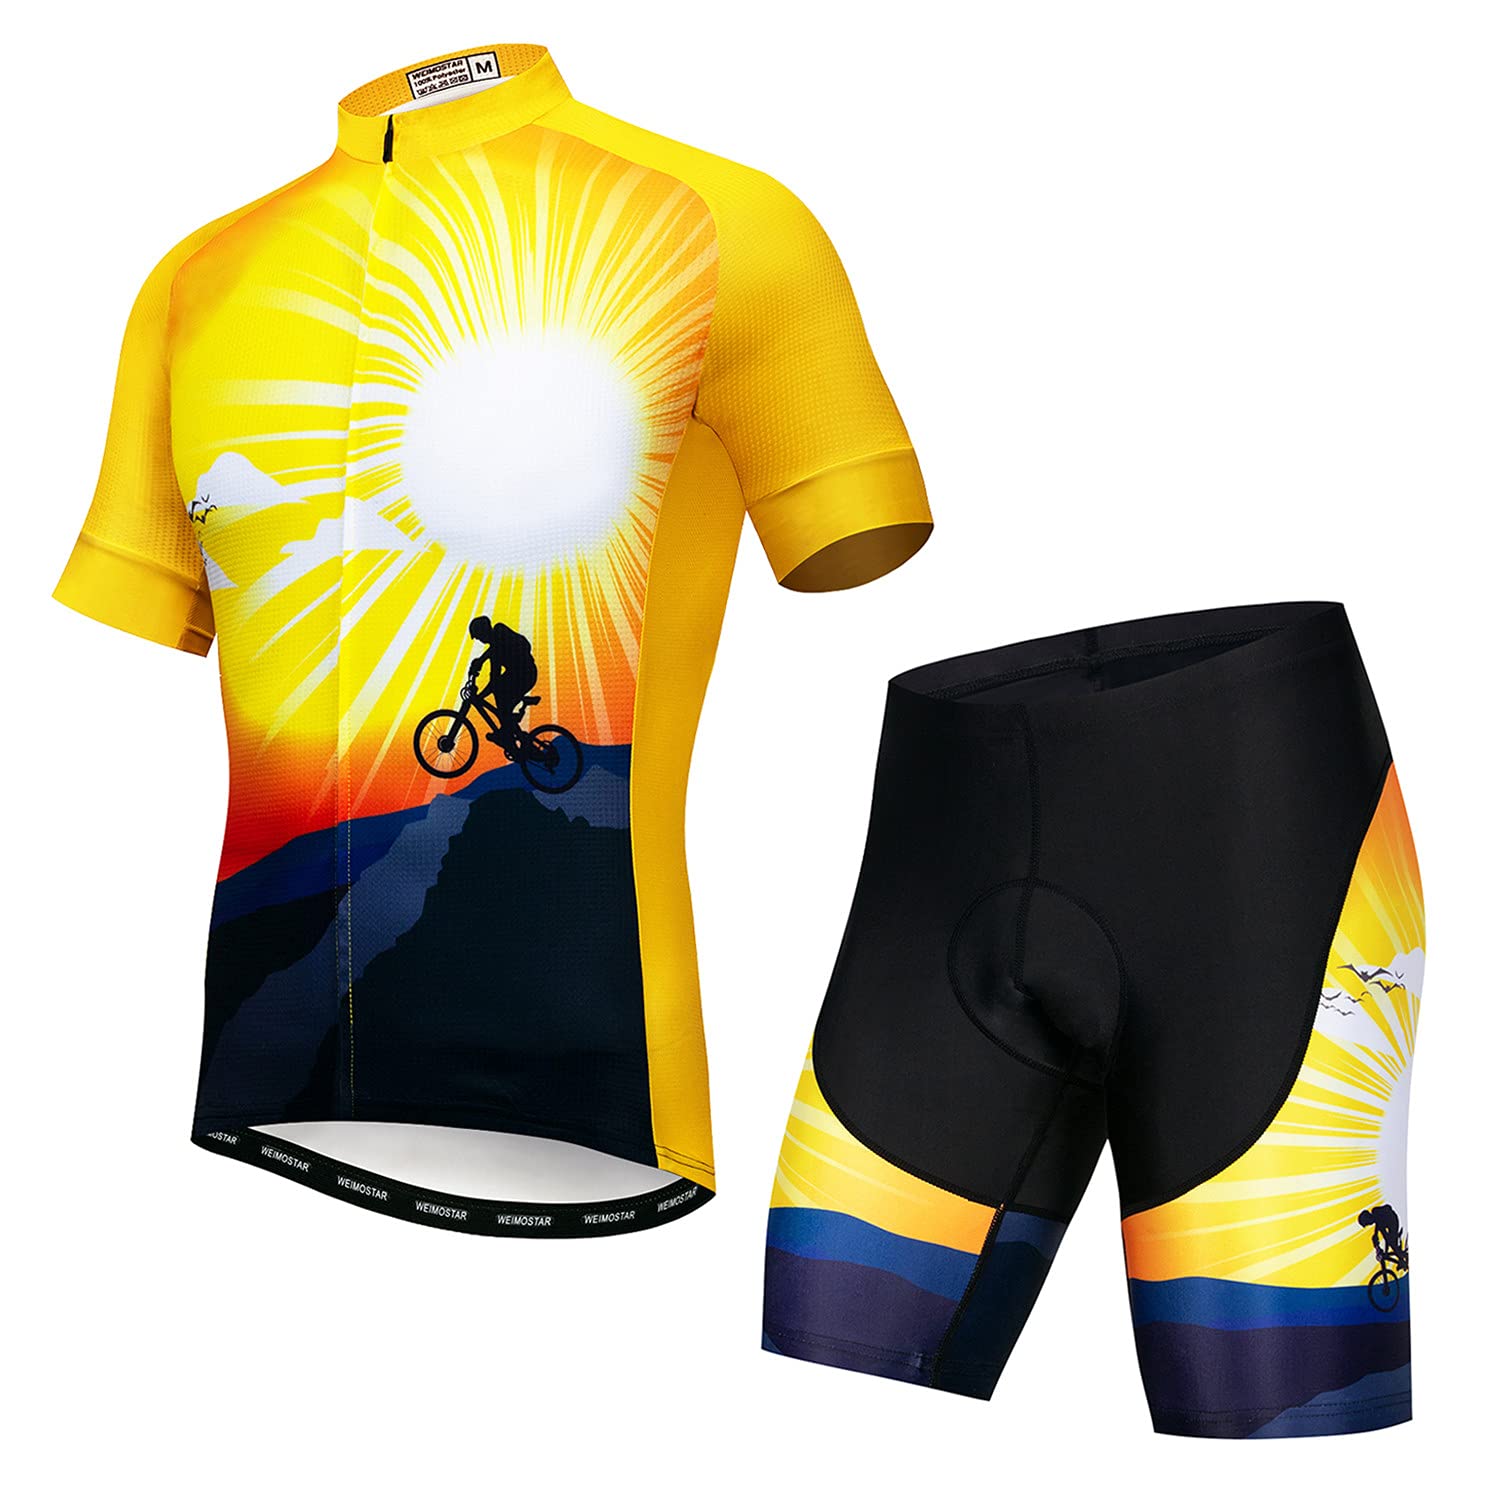 Cycling Jersey Shorts Set Padded Men Bike Top Suit